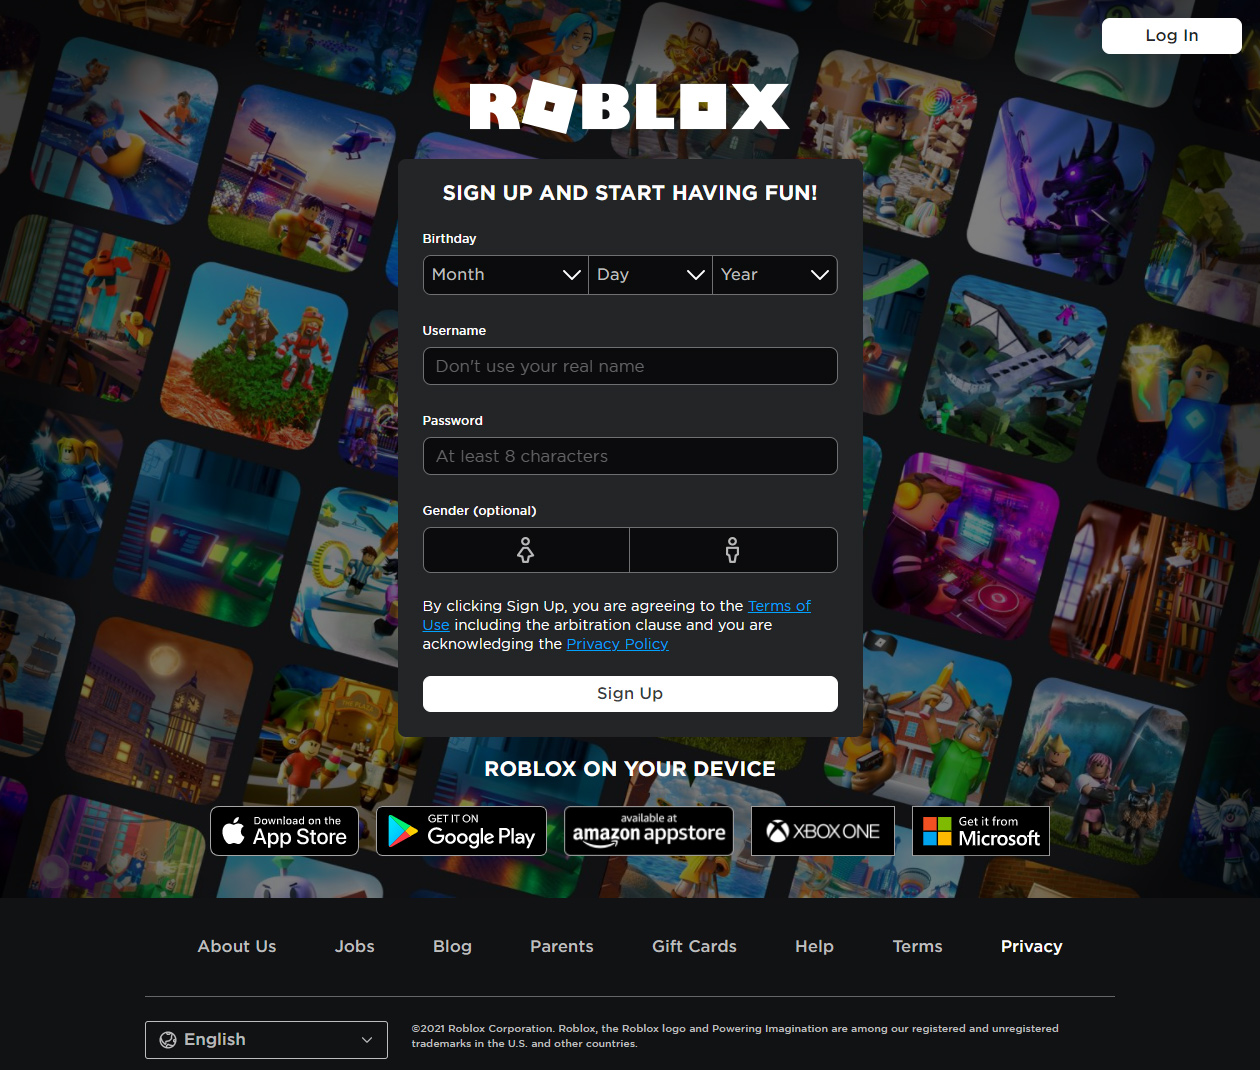 Roblox in 2005 - Web Design Museum